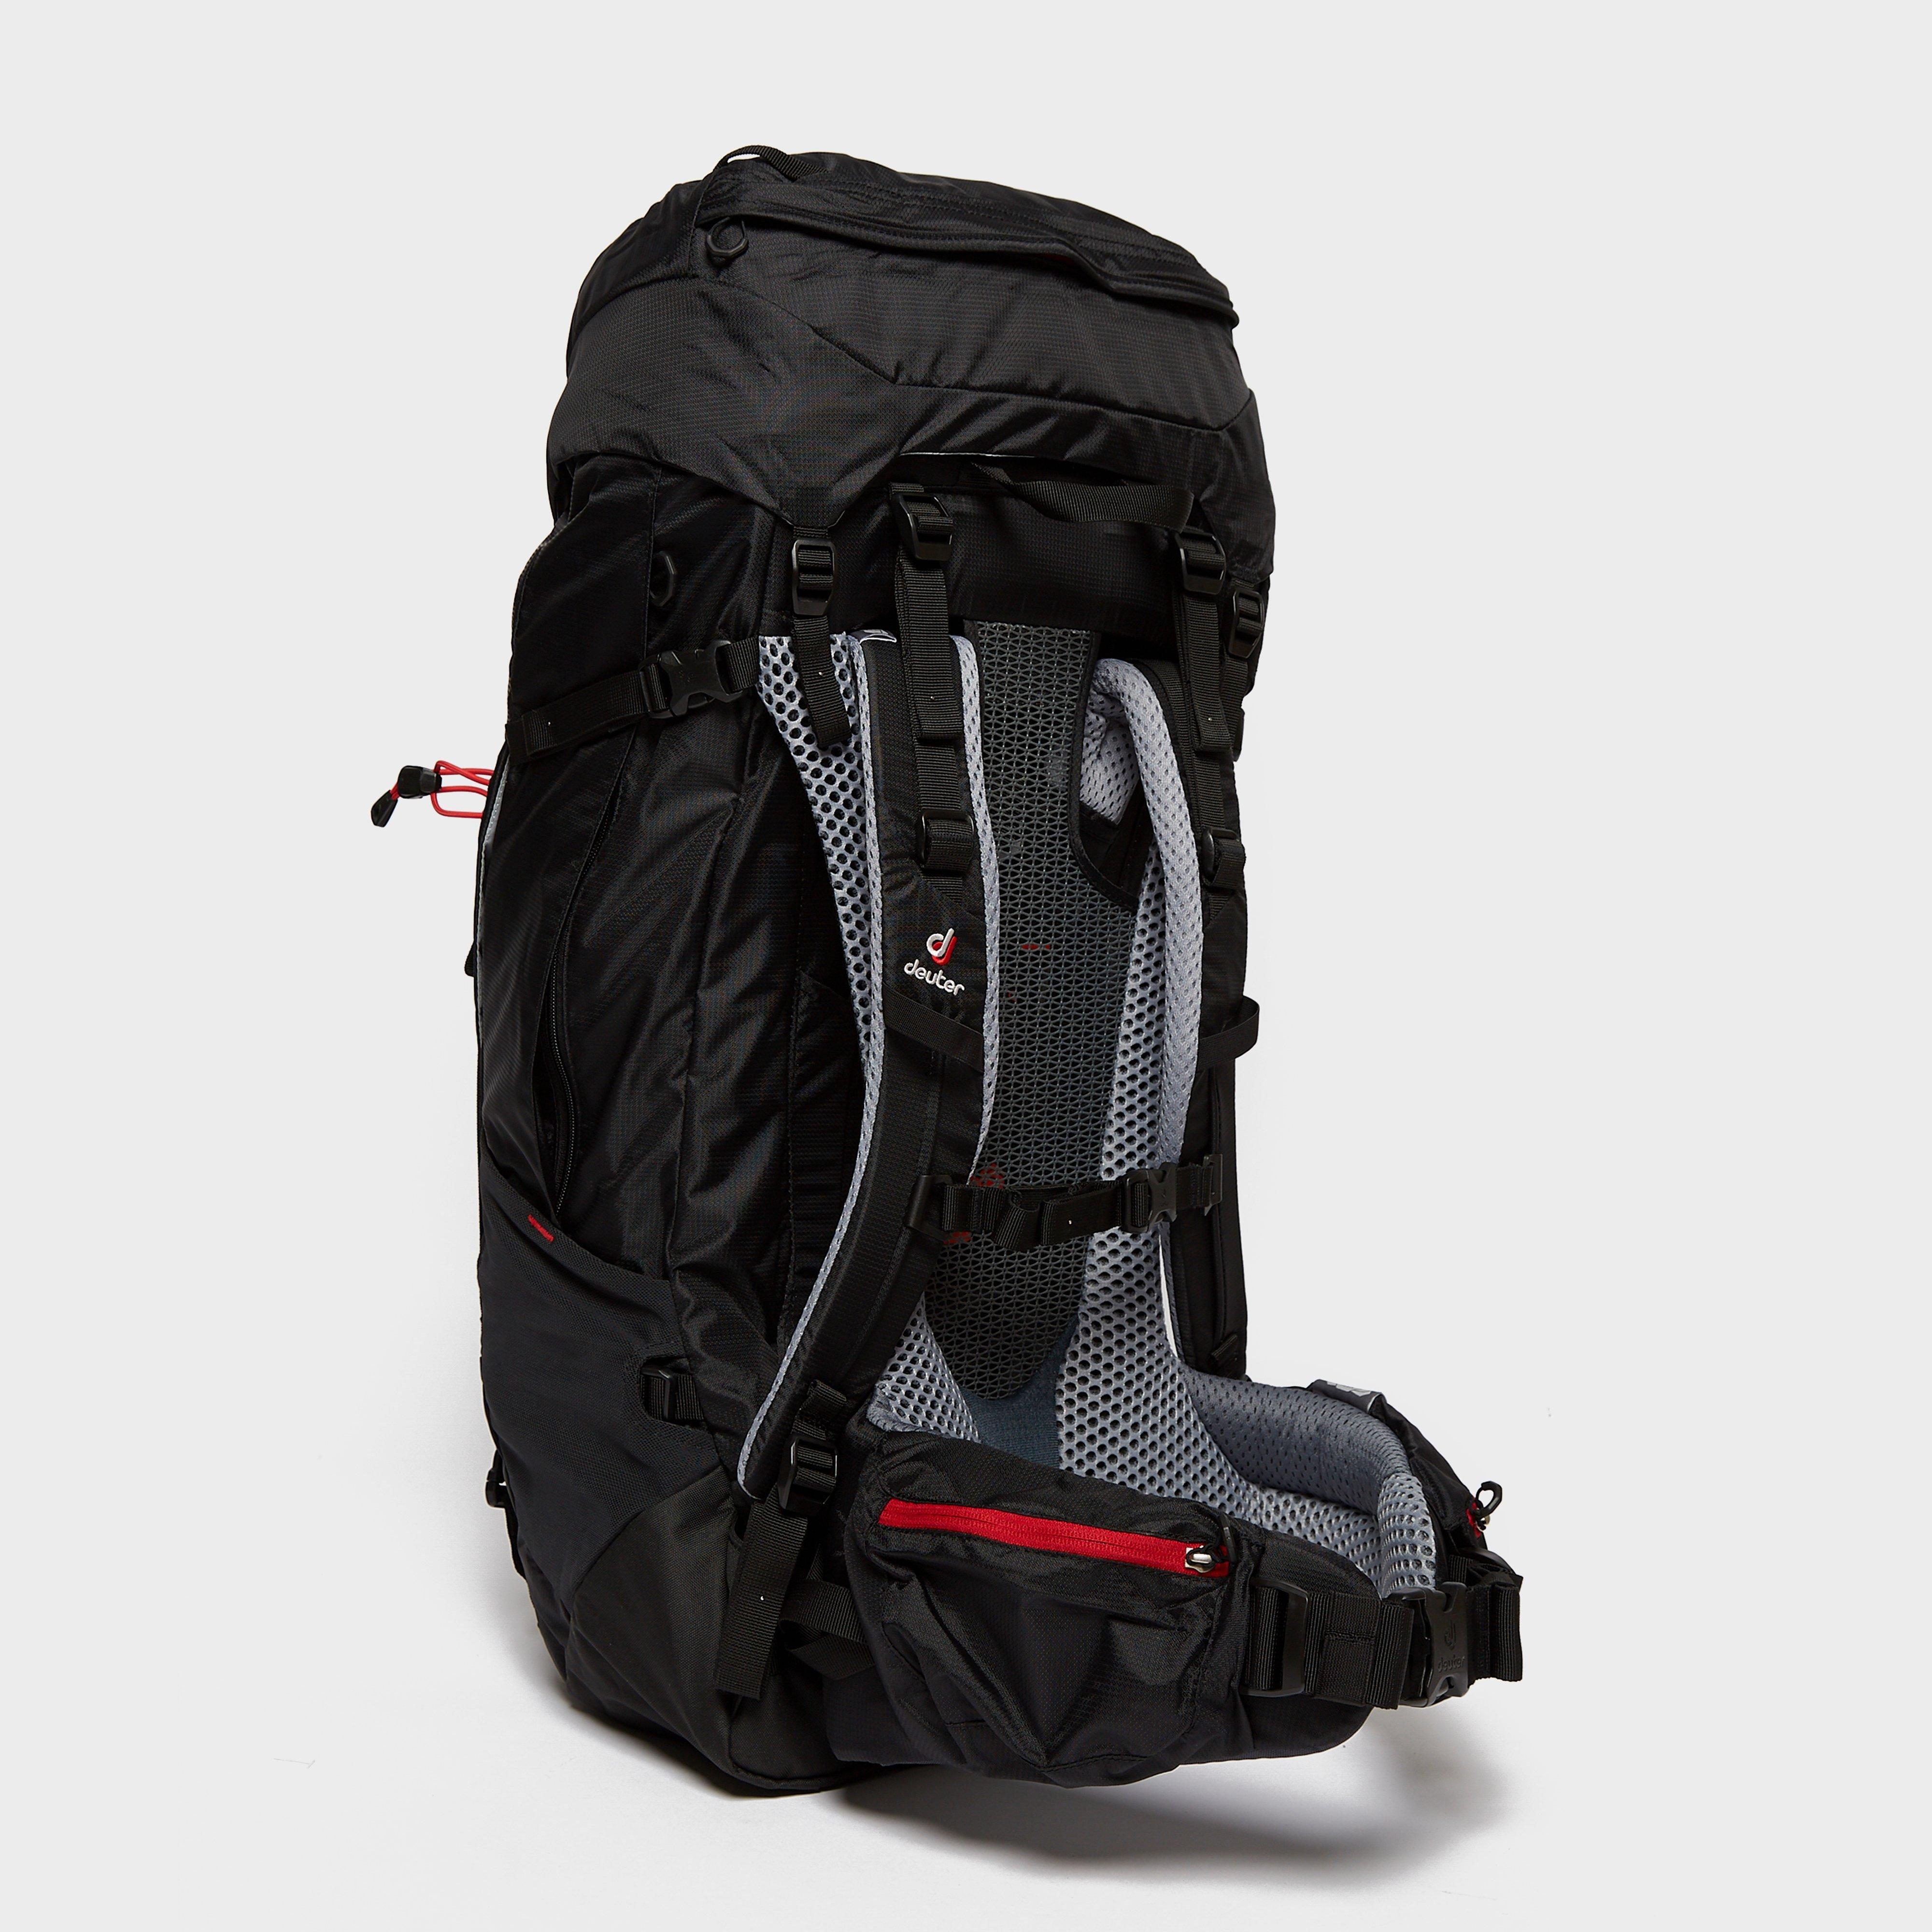 Deuter Futura Vario 50+10 Backpack Review